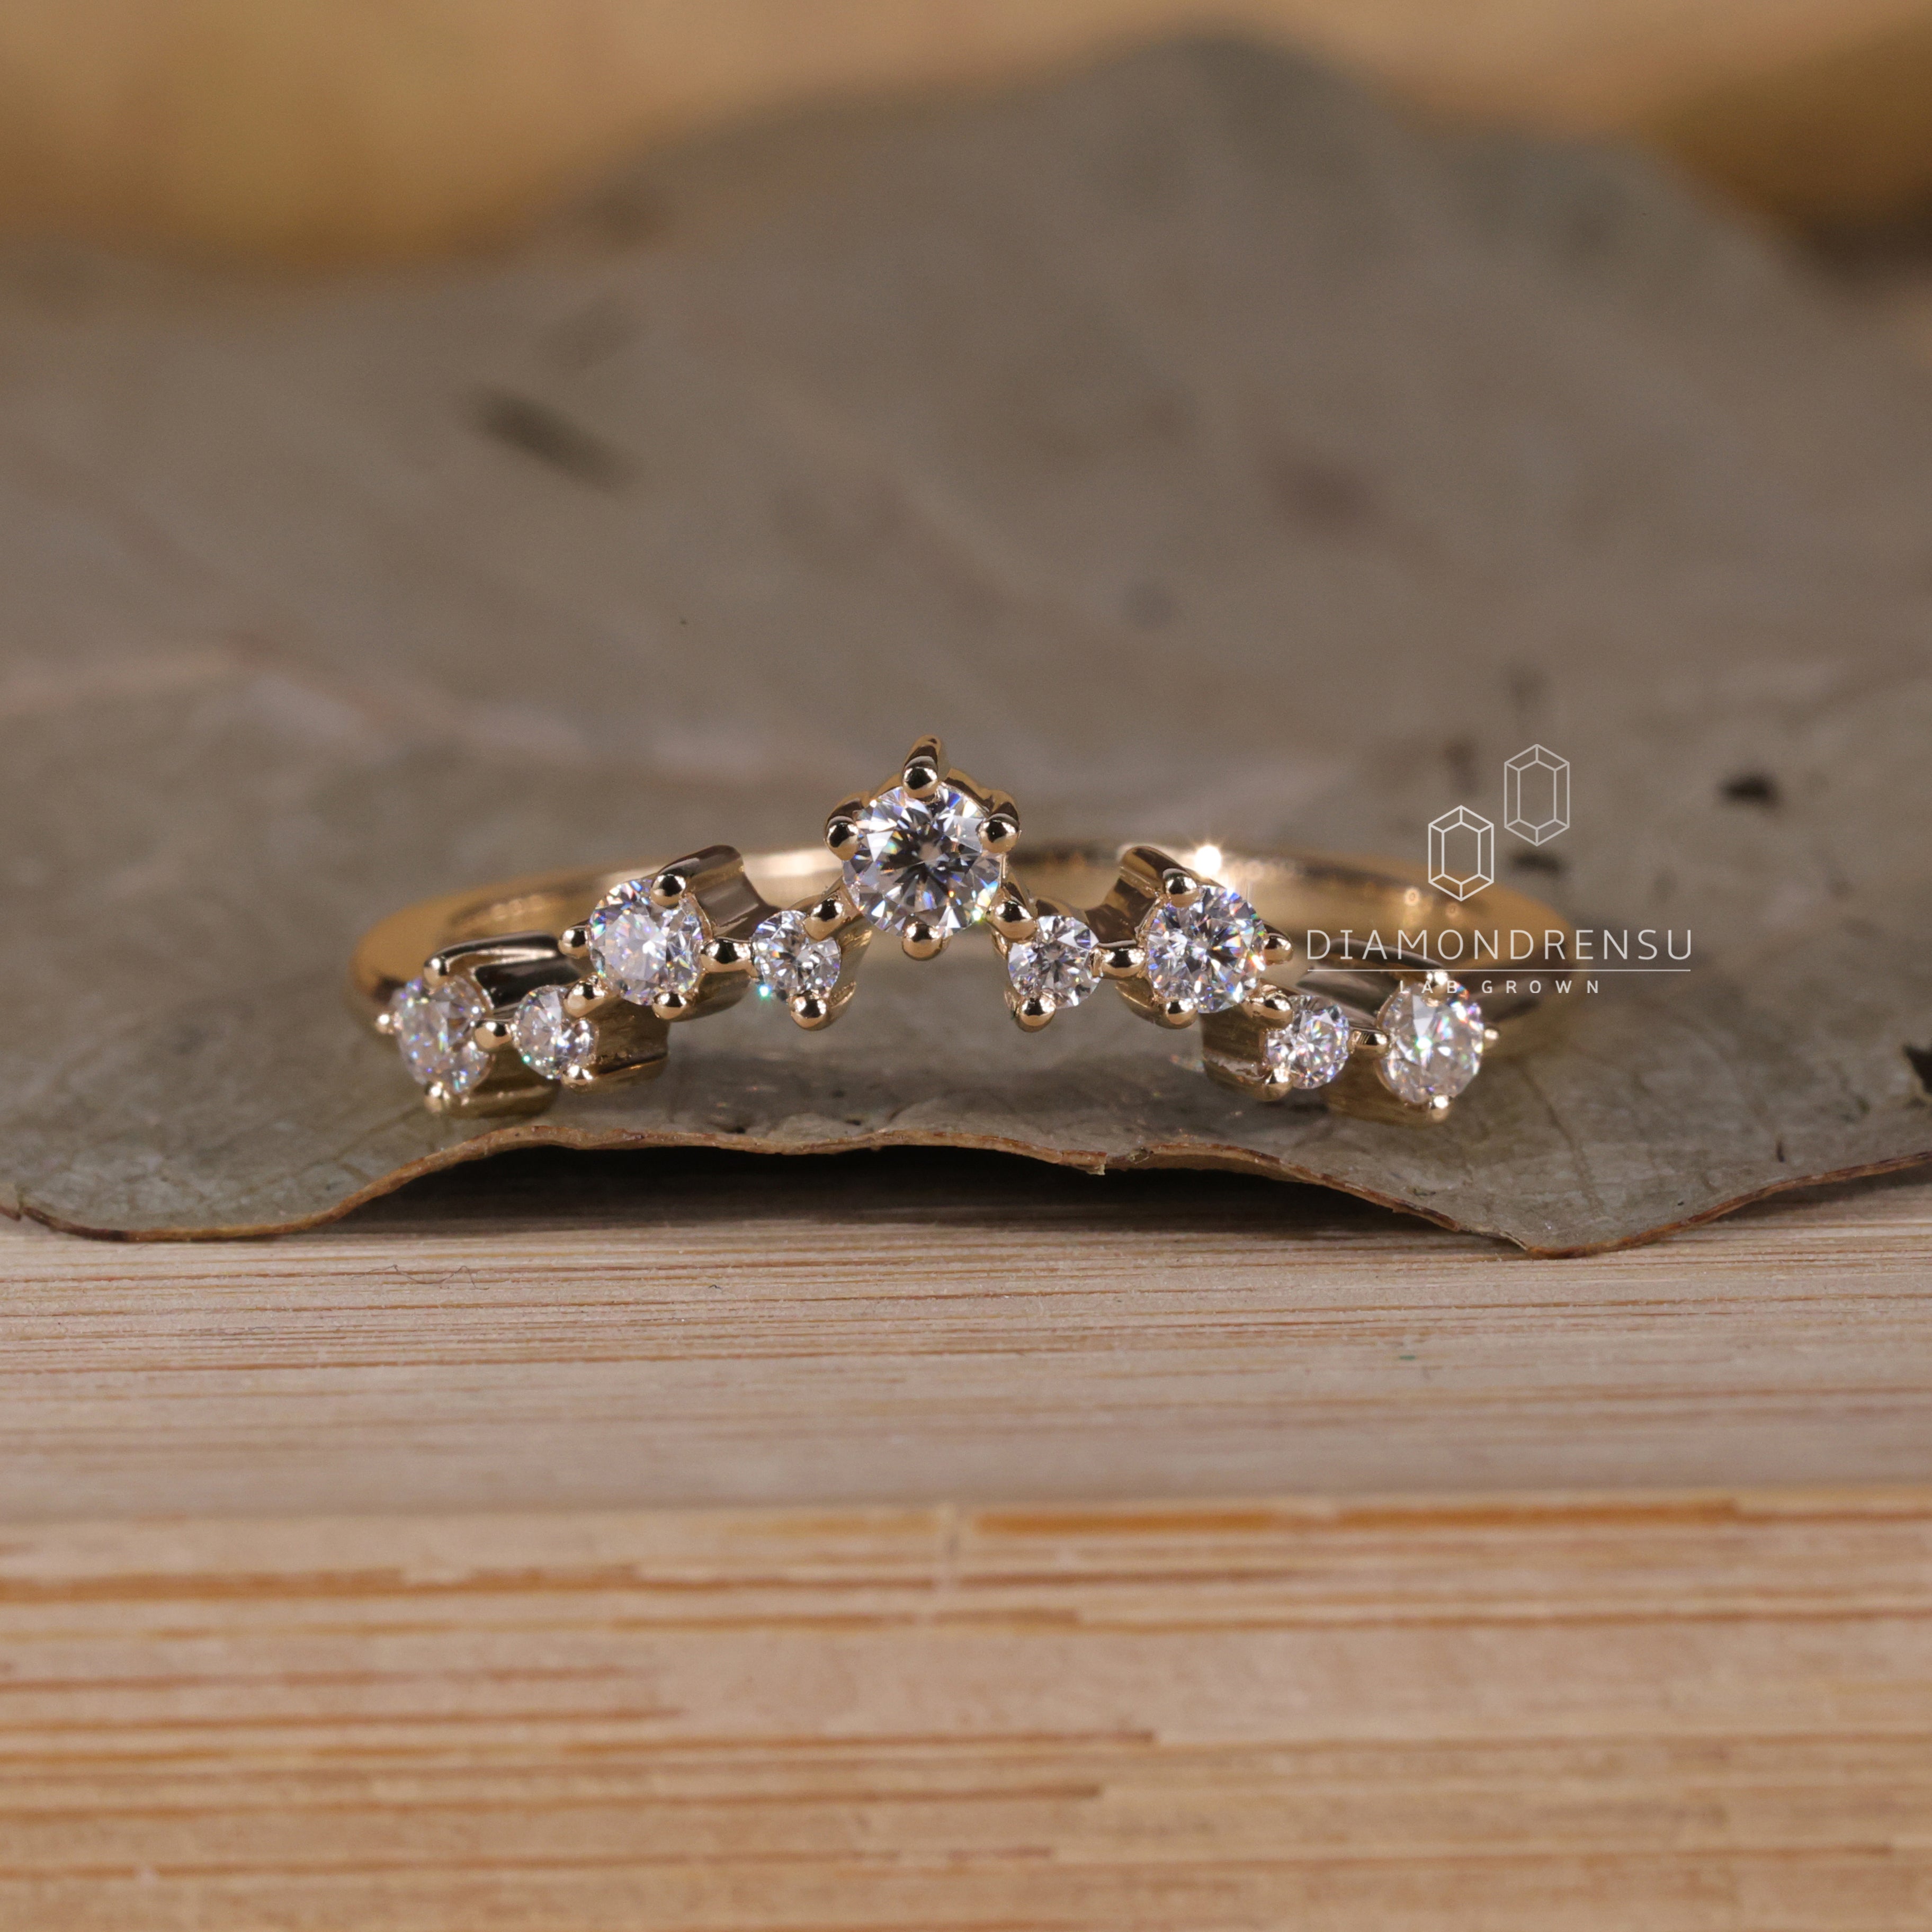 lab created diamond wedding band - diamondrensu